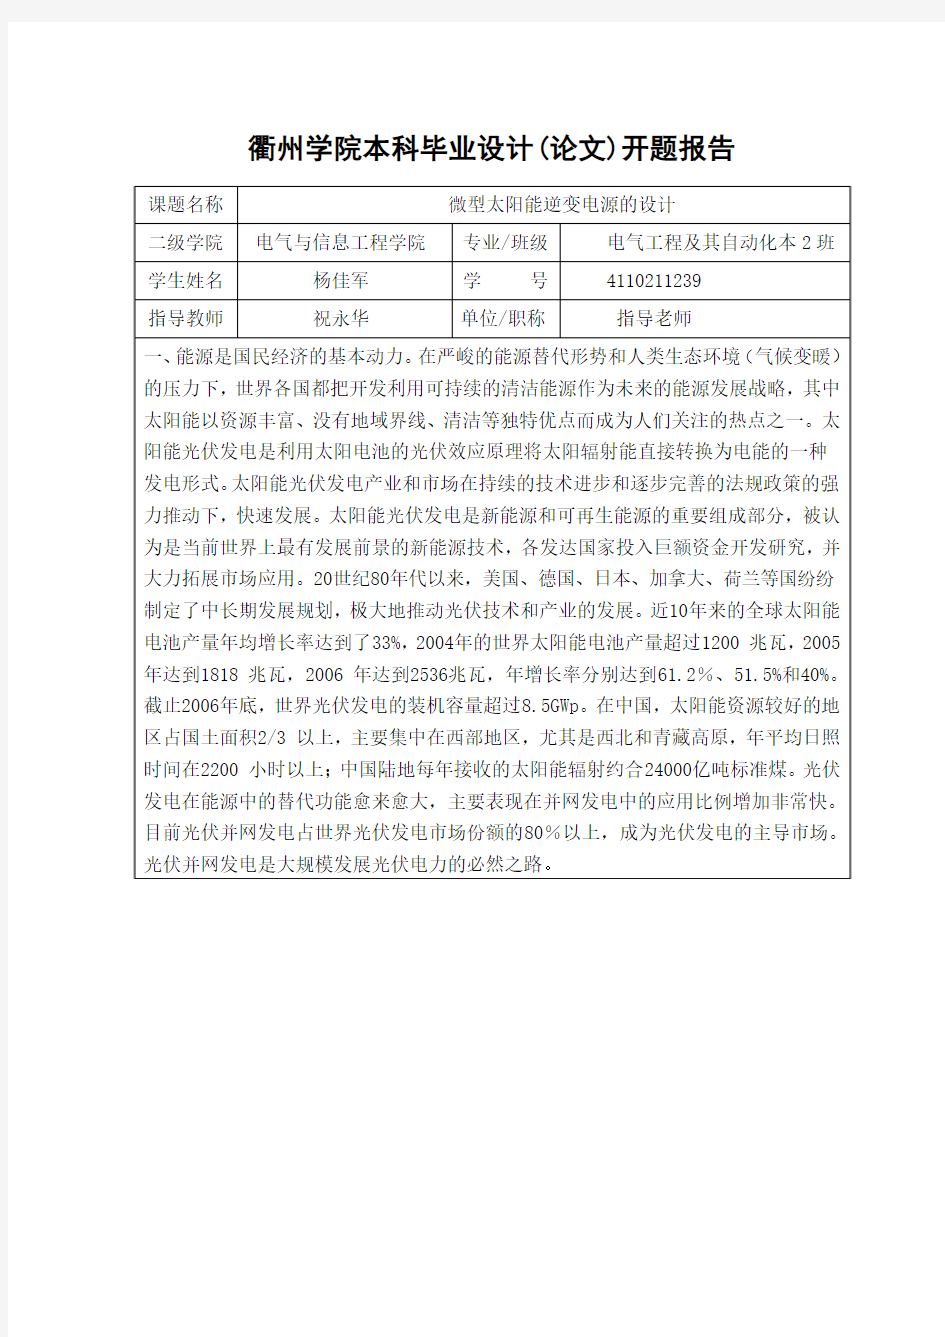 D3衢州学院本科毕业设计(论文)开题报告--学生 - 副本